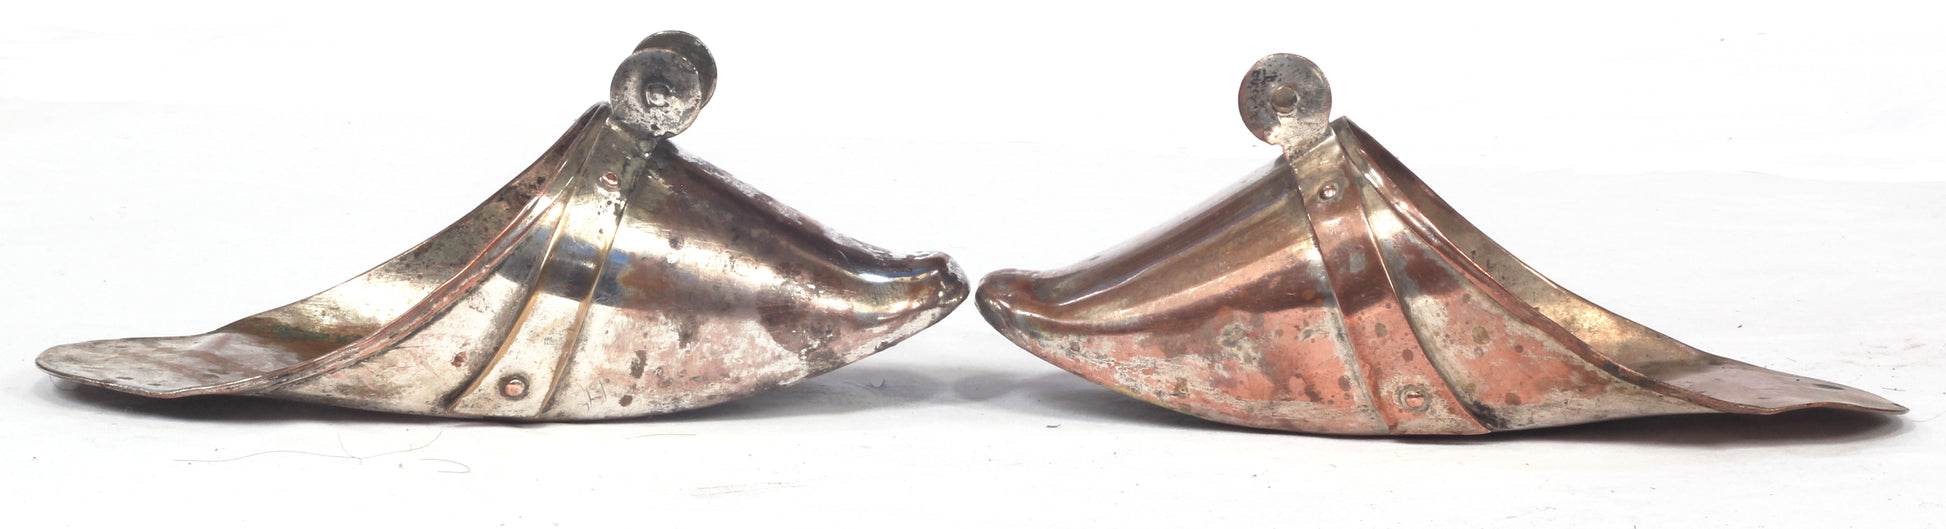 Pair of Latin American Slipper stirrups